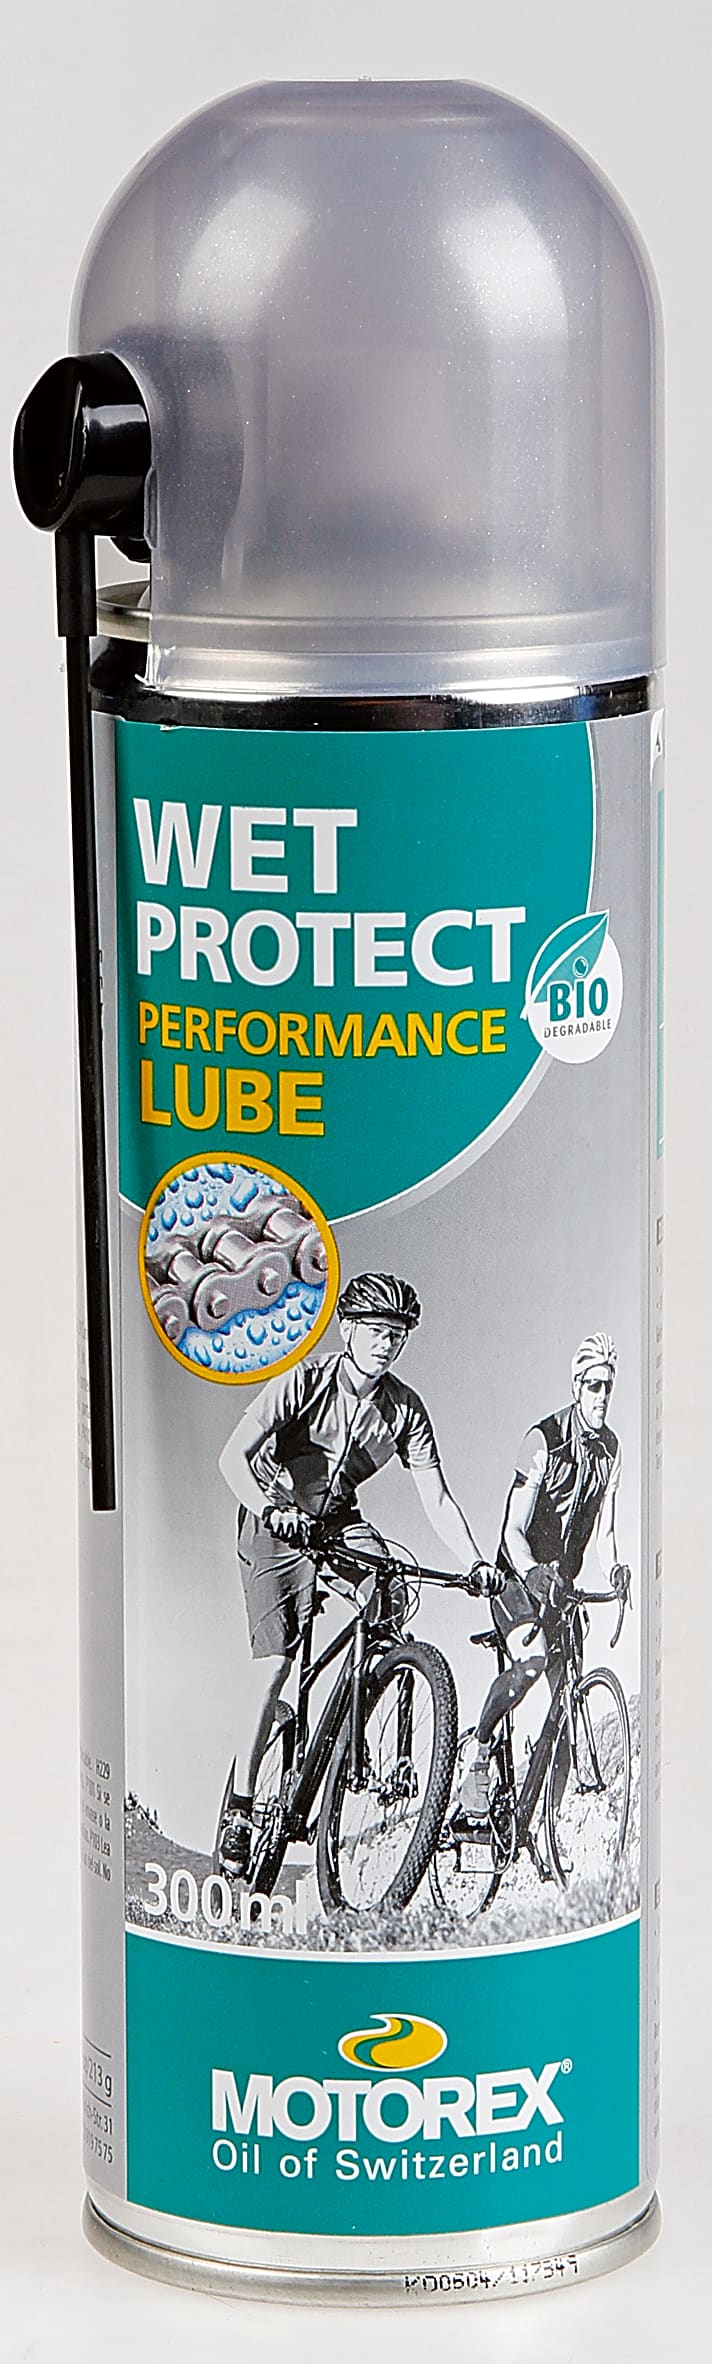   Motorex Wet Protect